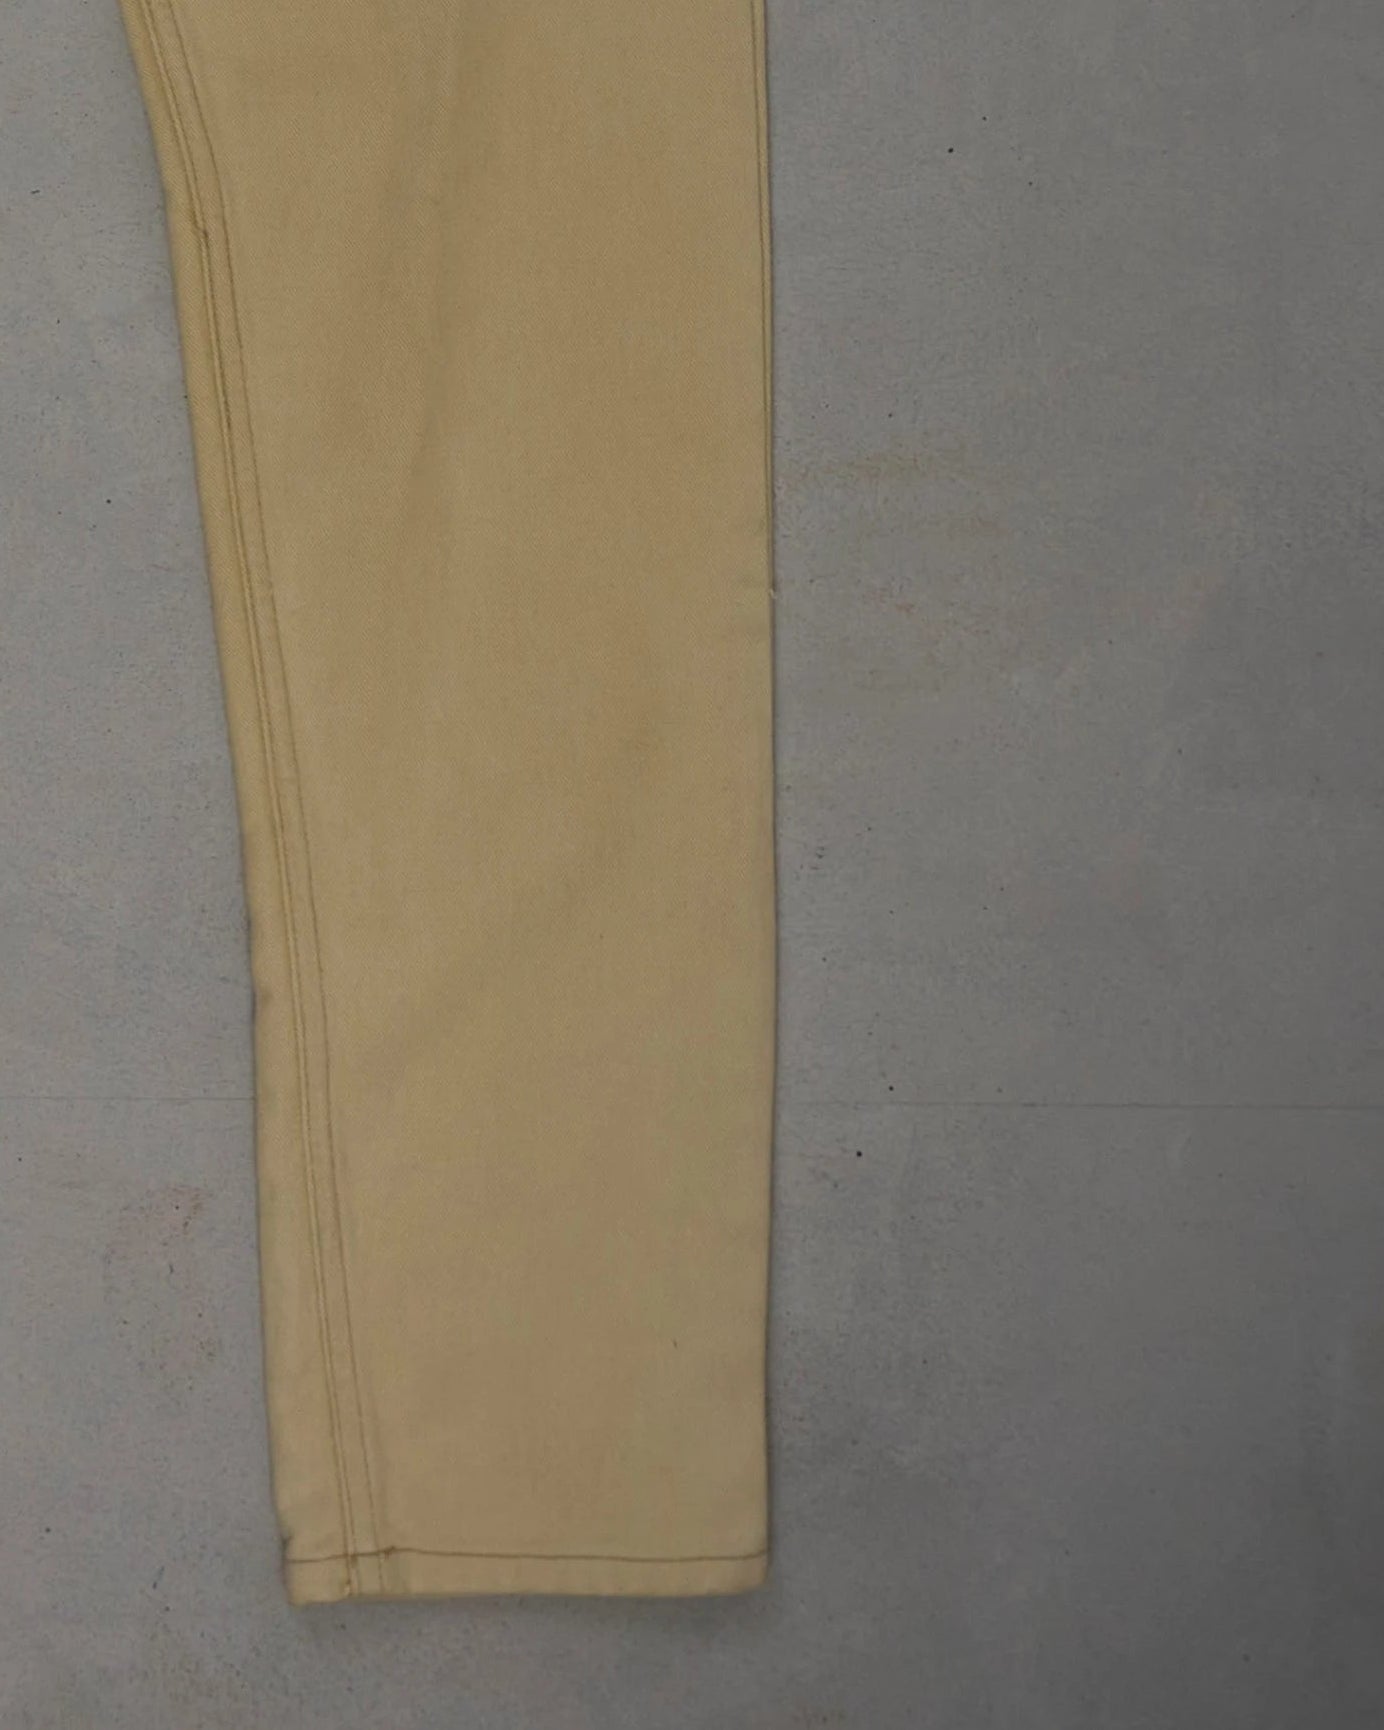 Vintage Calvin Klein Pants